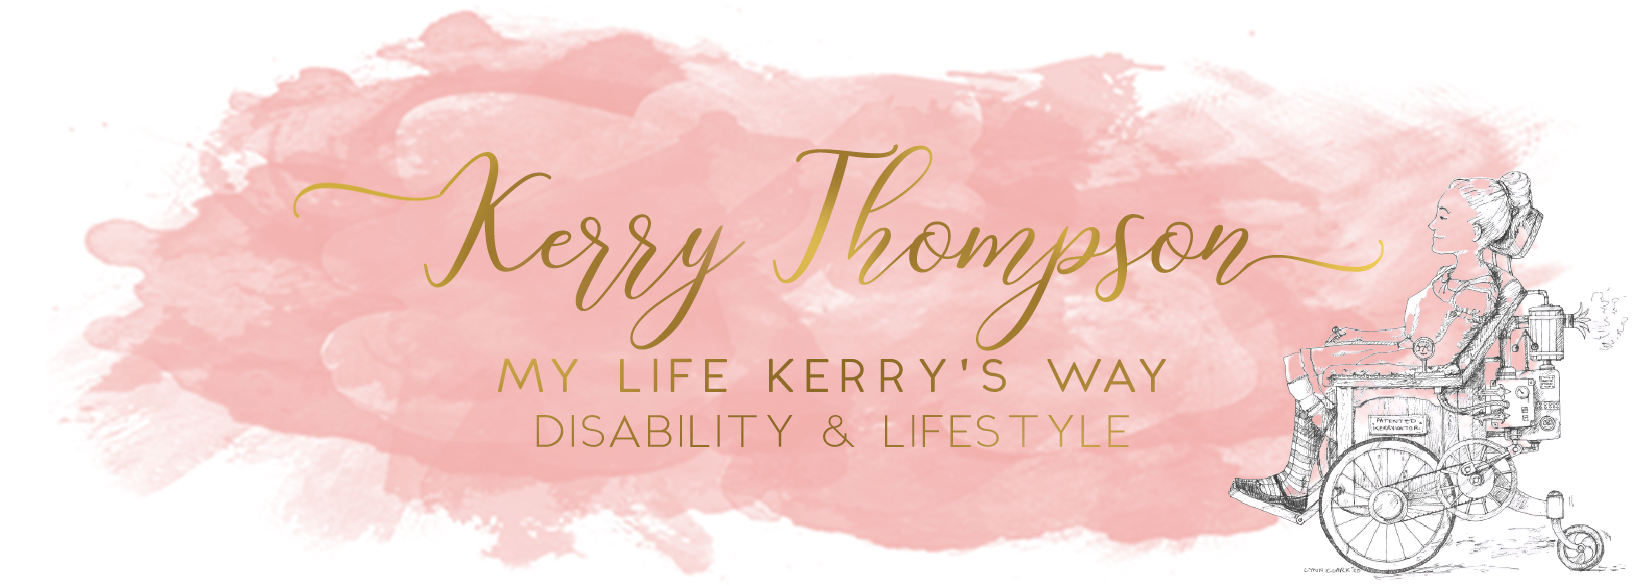 Kerry Thompson – My Life, Kerry's Way.